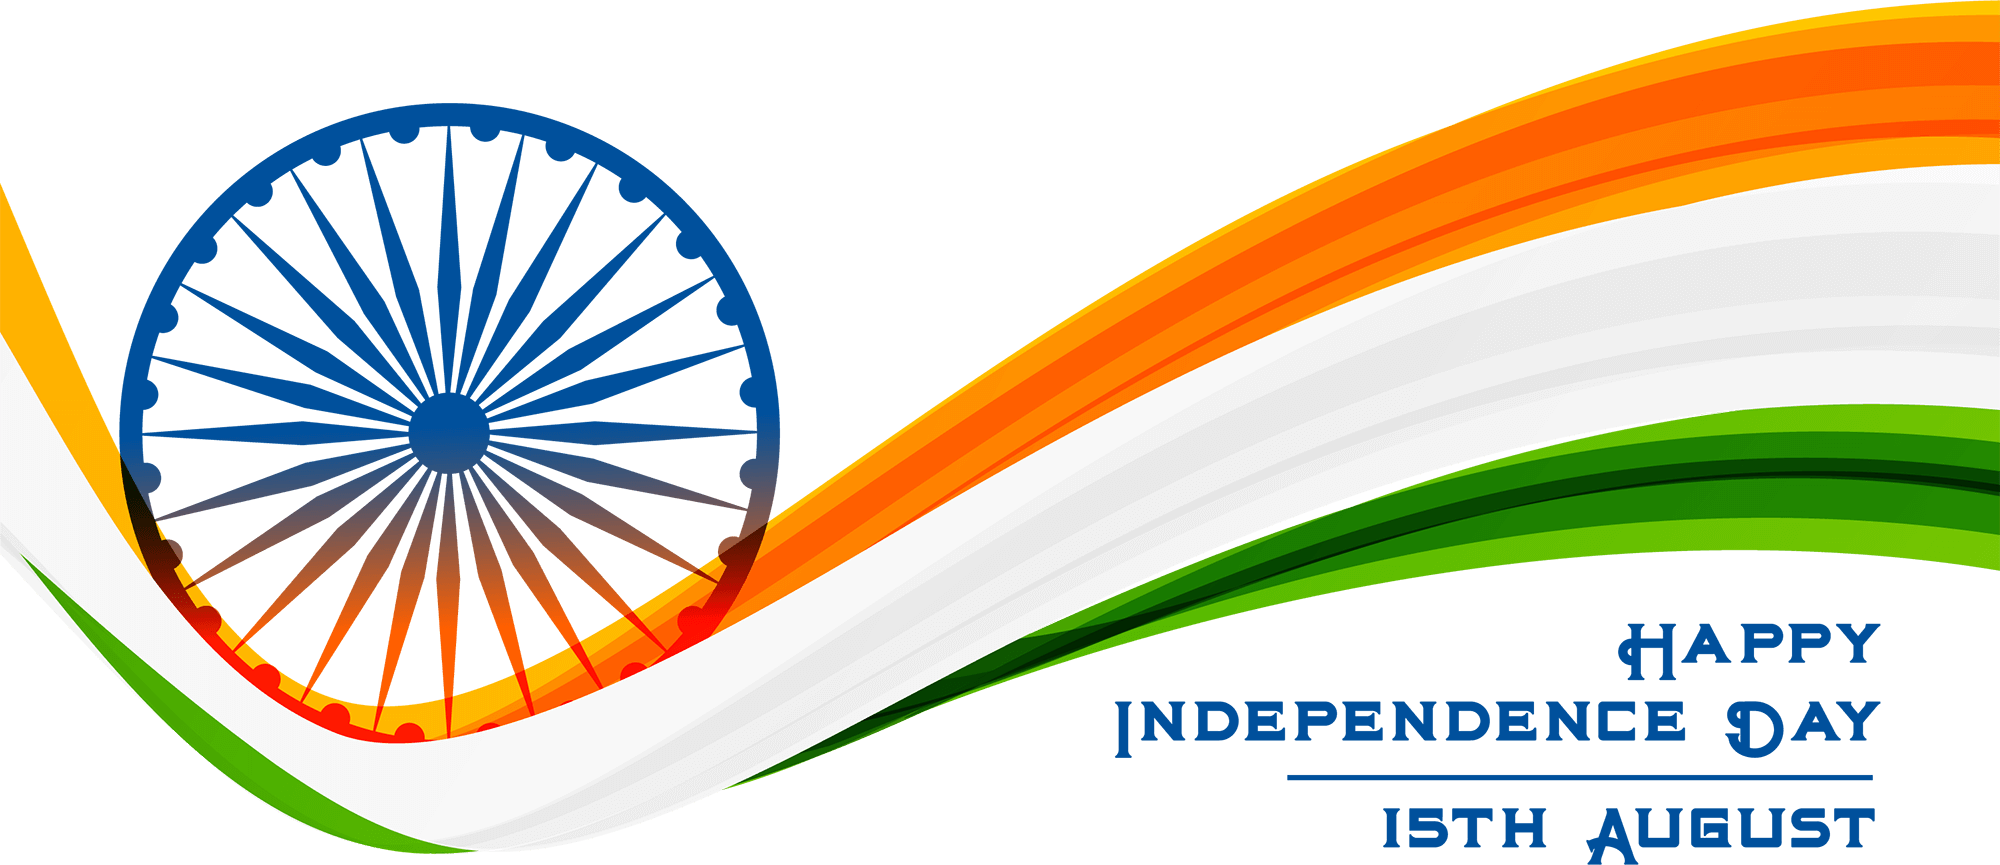 Independence Day Celebration Shape Happy India Independence Day